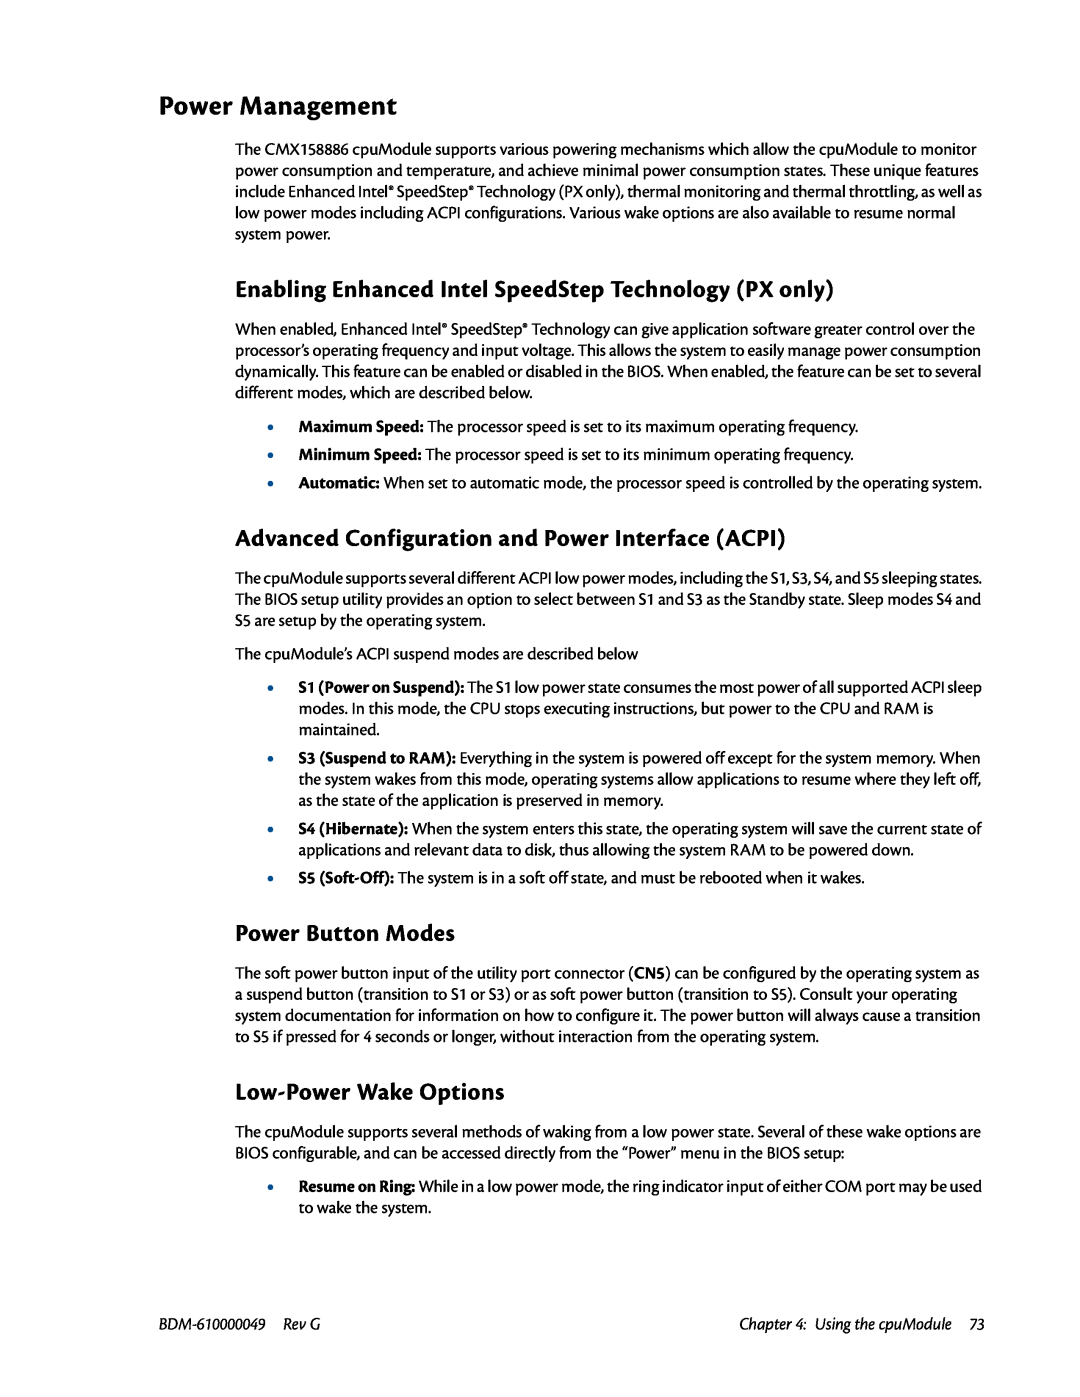 IBM BDM-610000049 user manual Power Management, Enabling Enhanced Intel SpeedStep Technology PX only, Power Button Modes 